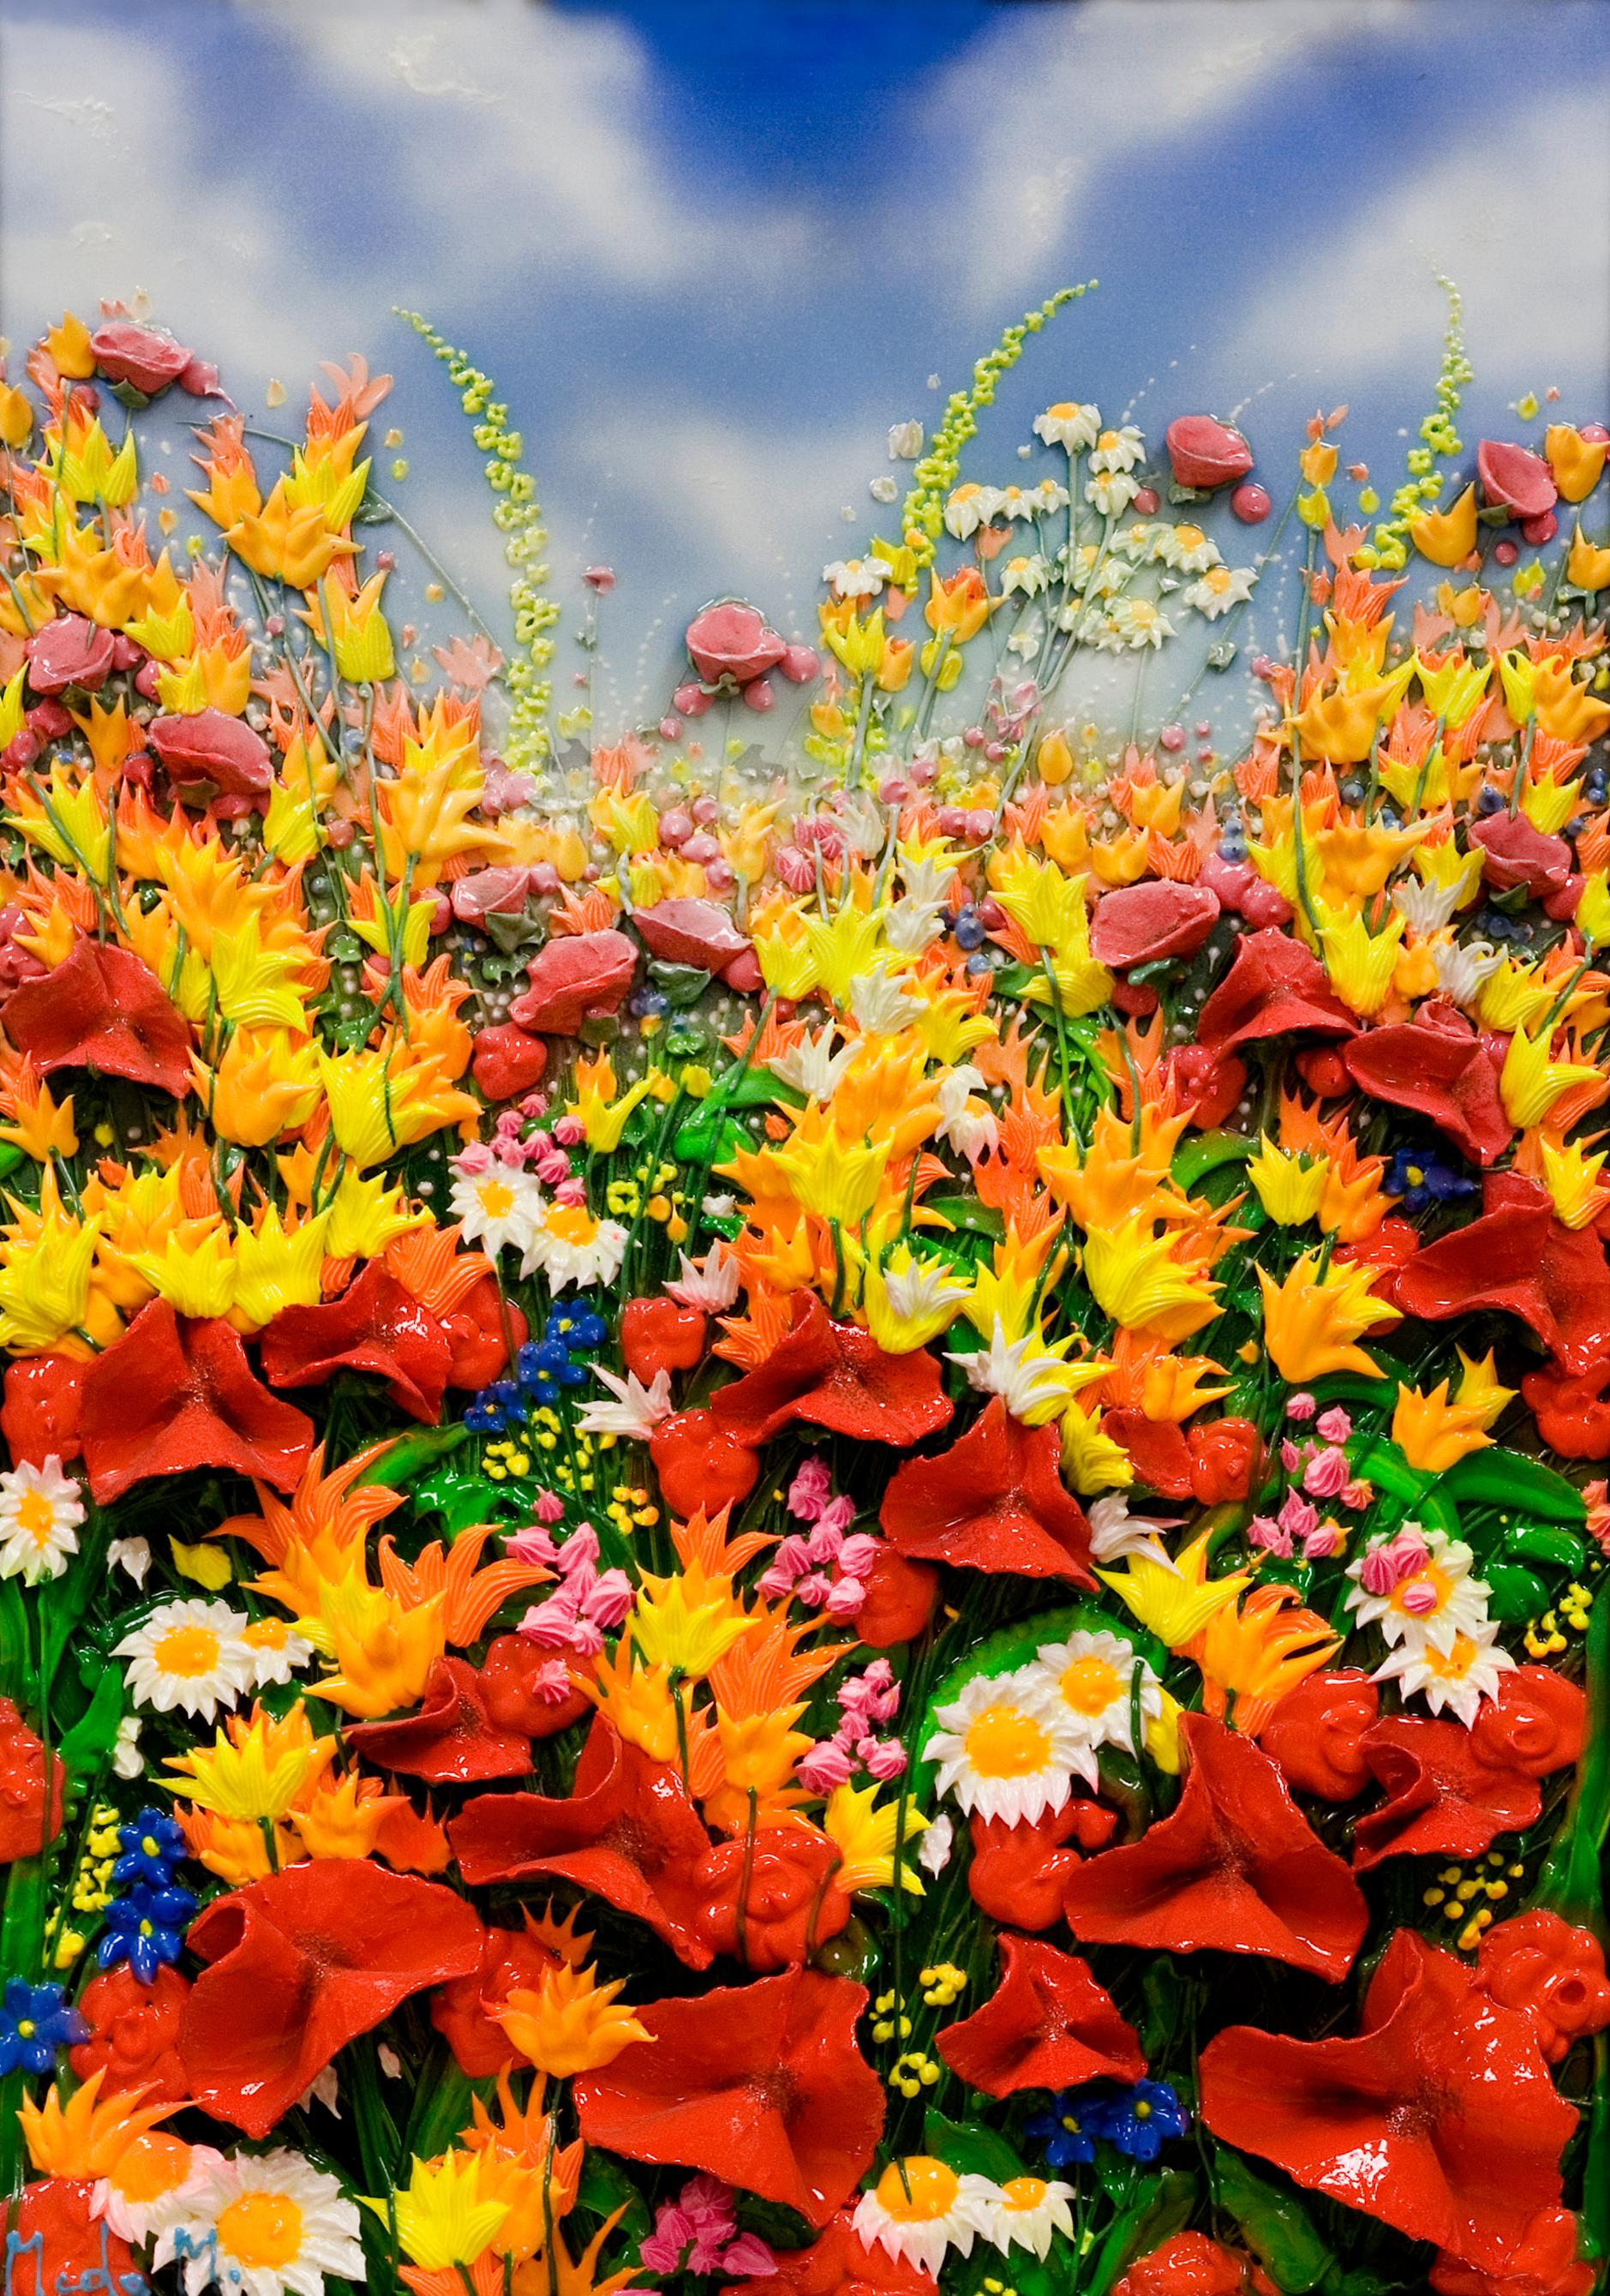 Wildflowers - Painting by Massimo Meda